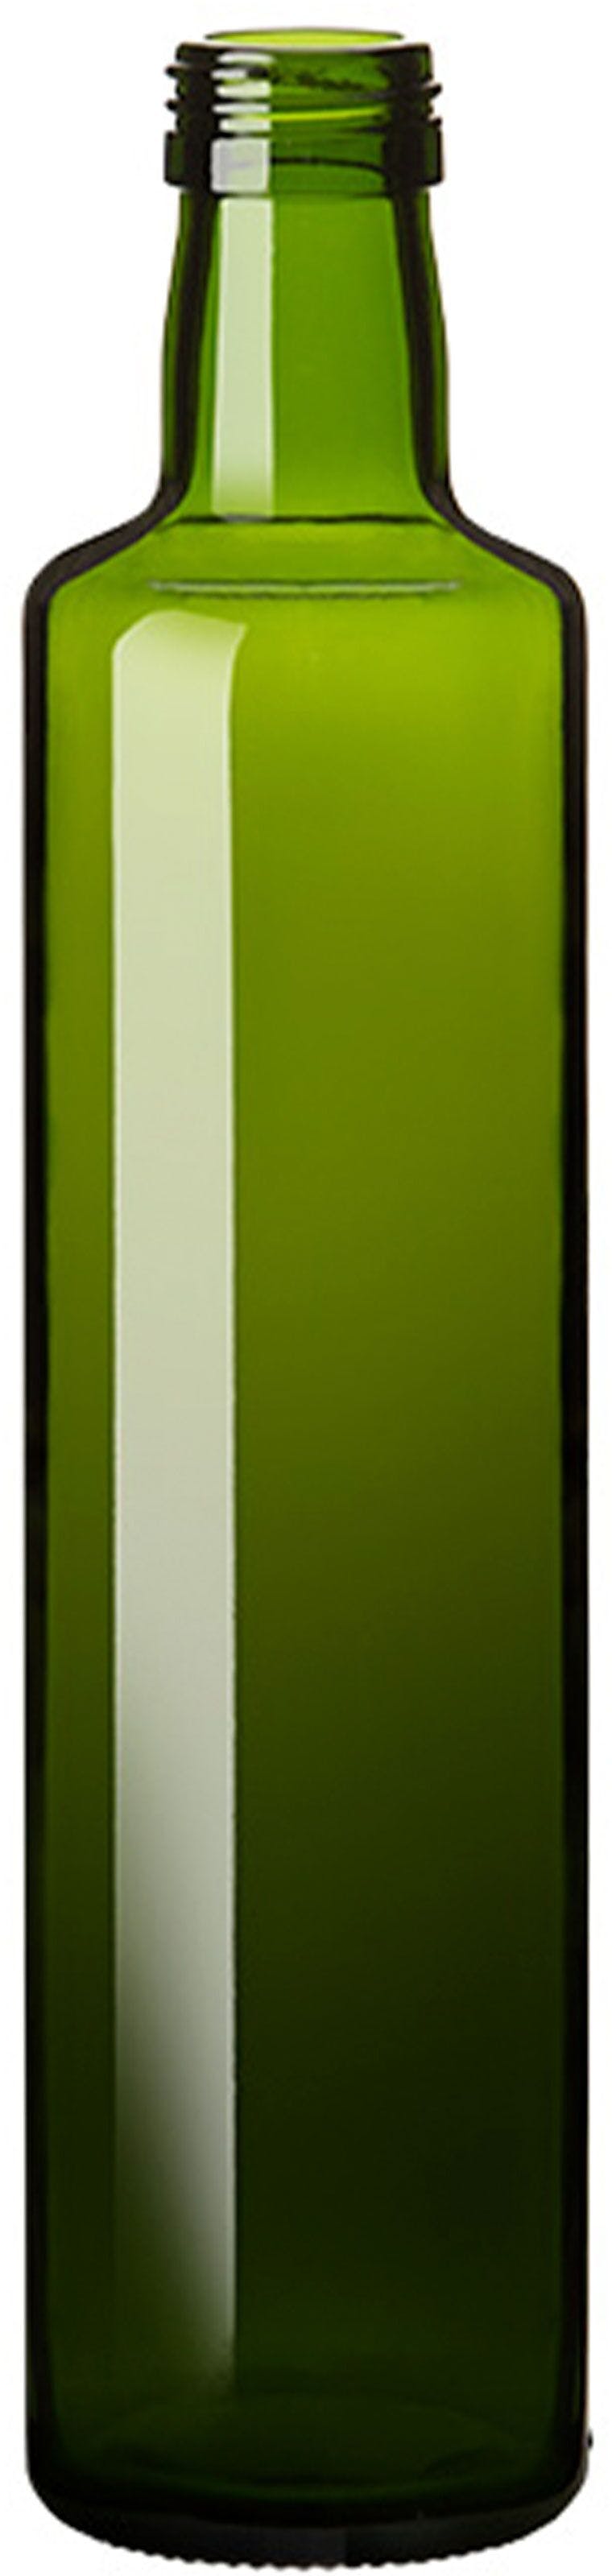 Botella DORICA 500 P 31,5 X 18 VV